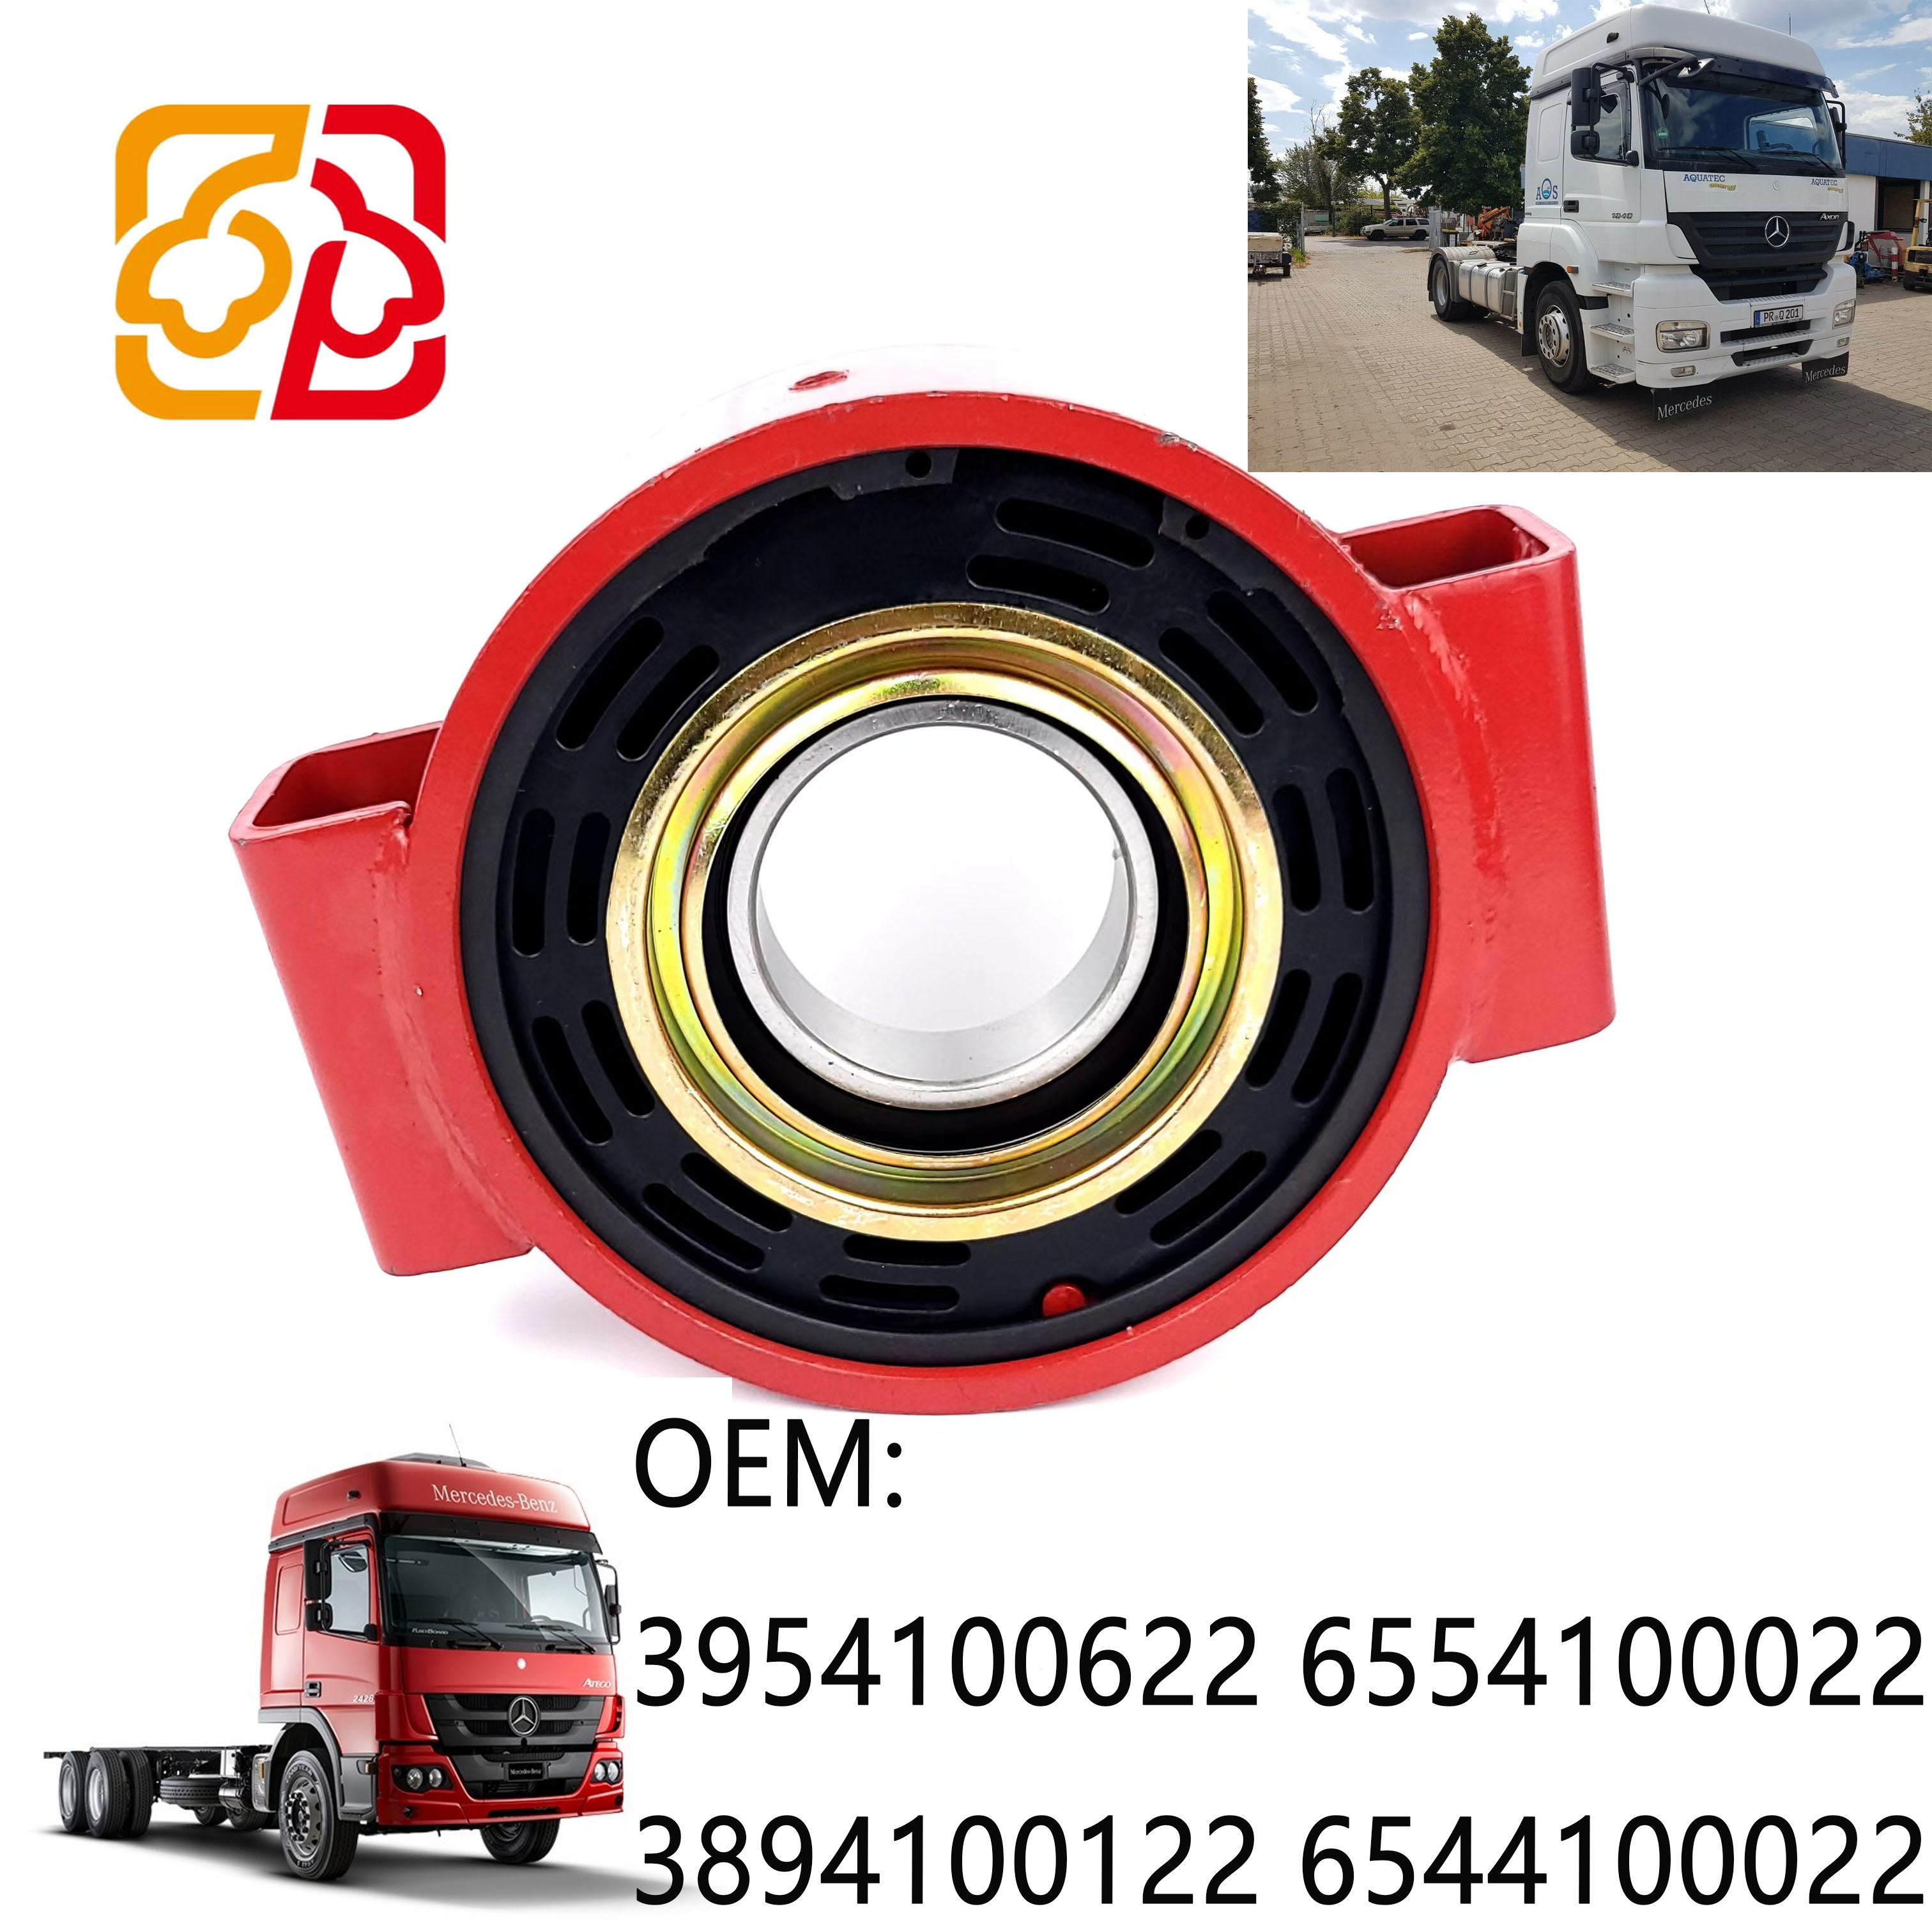 Bearing center bearing 6554100022. for truck supplier